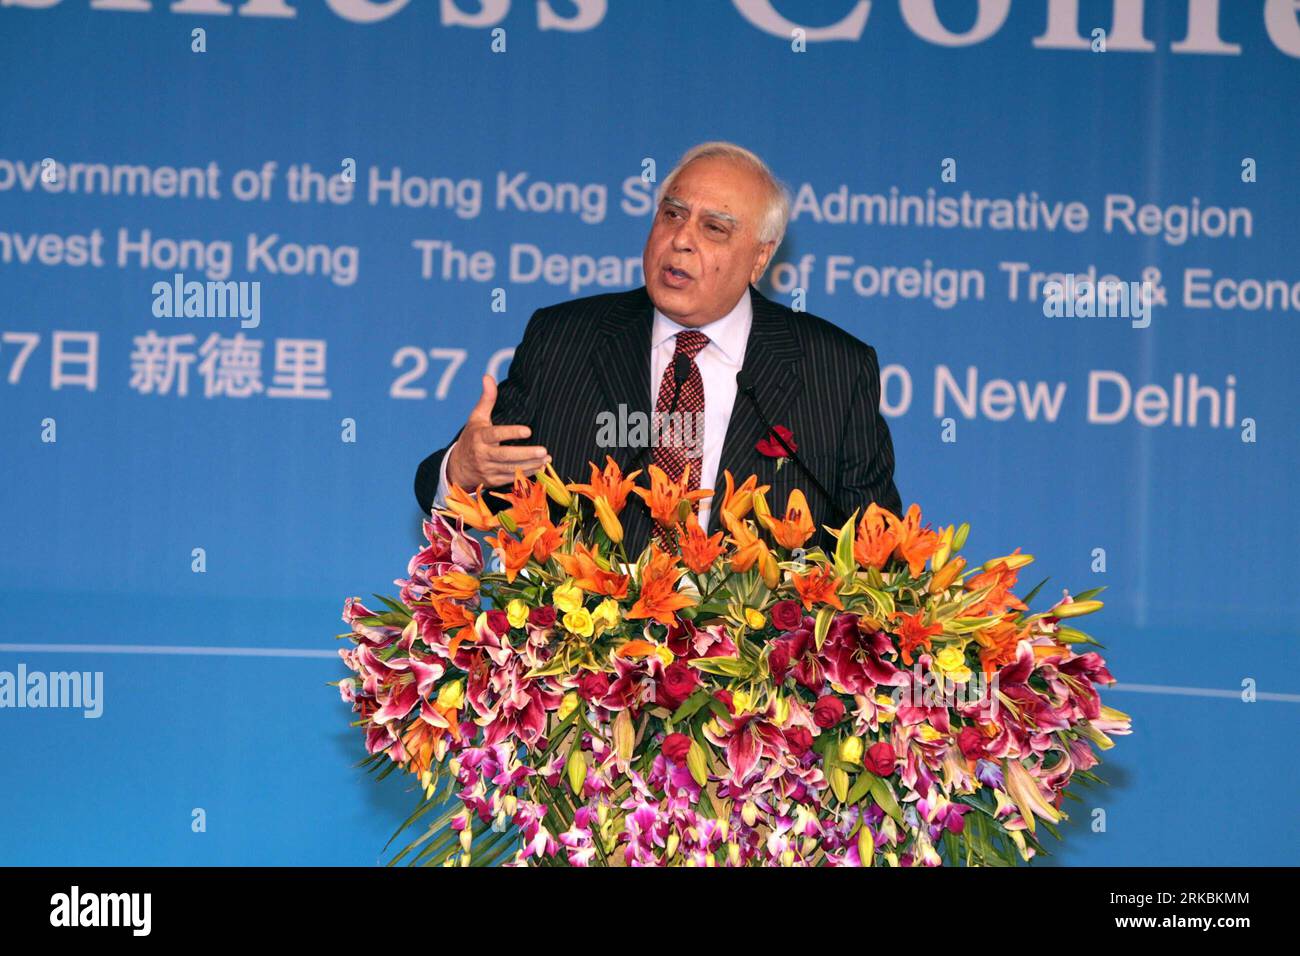 Bildnummer: 54573592  Datum: 27.10.2010  Copyright: imago/Xinhua NEW DELHI, Oct. 27, 2010 (Xinhua) -- Indian Minister for Human Resource Development Kapil Sibal speaks during the Hong Kong-Guangdong Business Conference in New Delhi 2010 held in the Indian capital of New Delhi, Oct. 27, 2010.(Xinhua/Li Yigang) (lyi) INDIA-NEW DELHI-HONG KONG-GUANGDONG-BUSINESS CONFERENCE PUBLICATIONxNOTxINxCHN People Politik premiumd kbdig xkg 2010 quer    Bildnummer 54573592 Date 27 10 2010 Copyright Imago XINHUA New Delhi OCT 27 2010 XINHUA Indian Ministers for Human Resource Development Kapil Sibal Speaks du Stock Photo